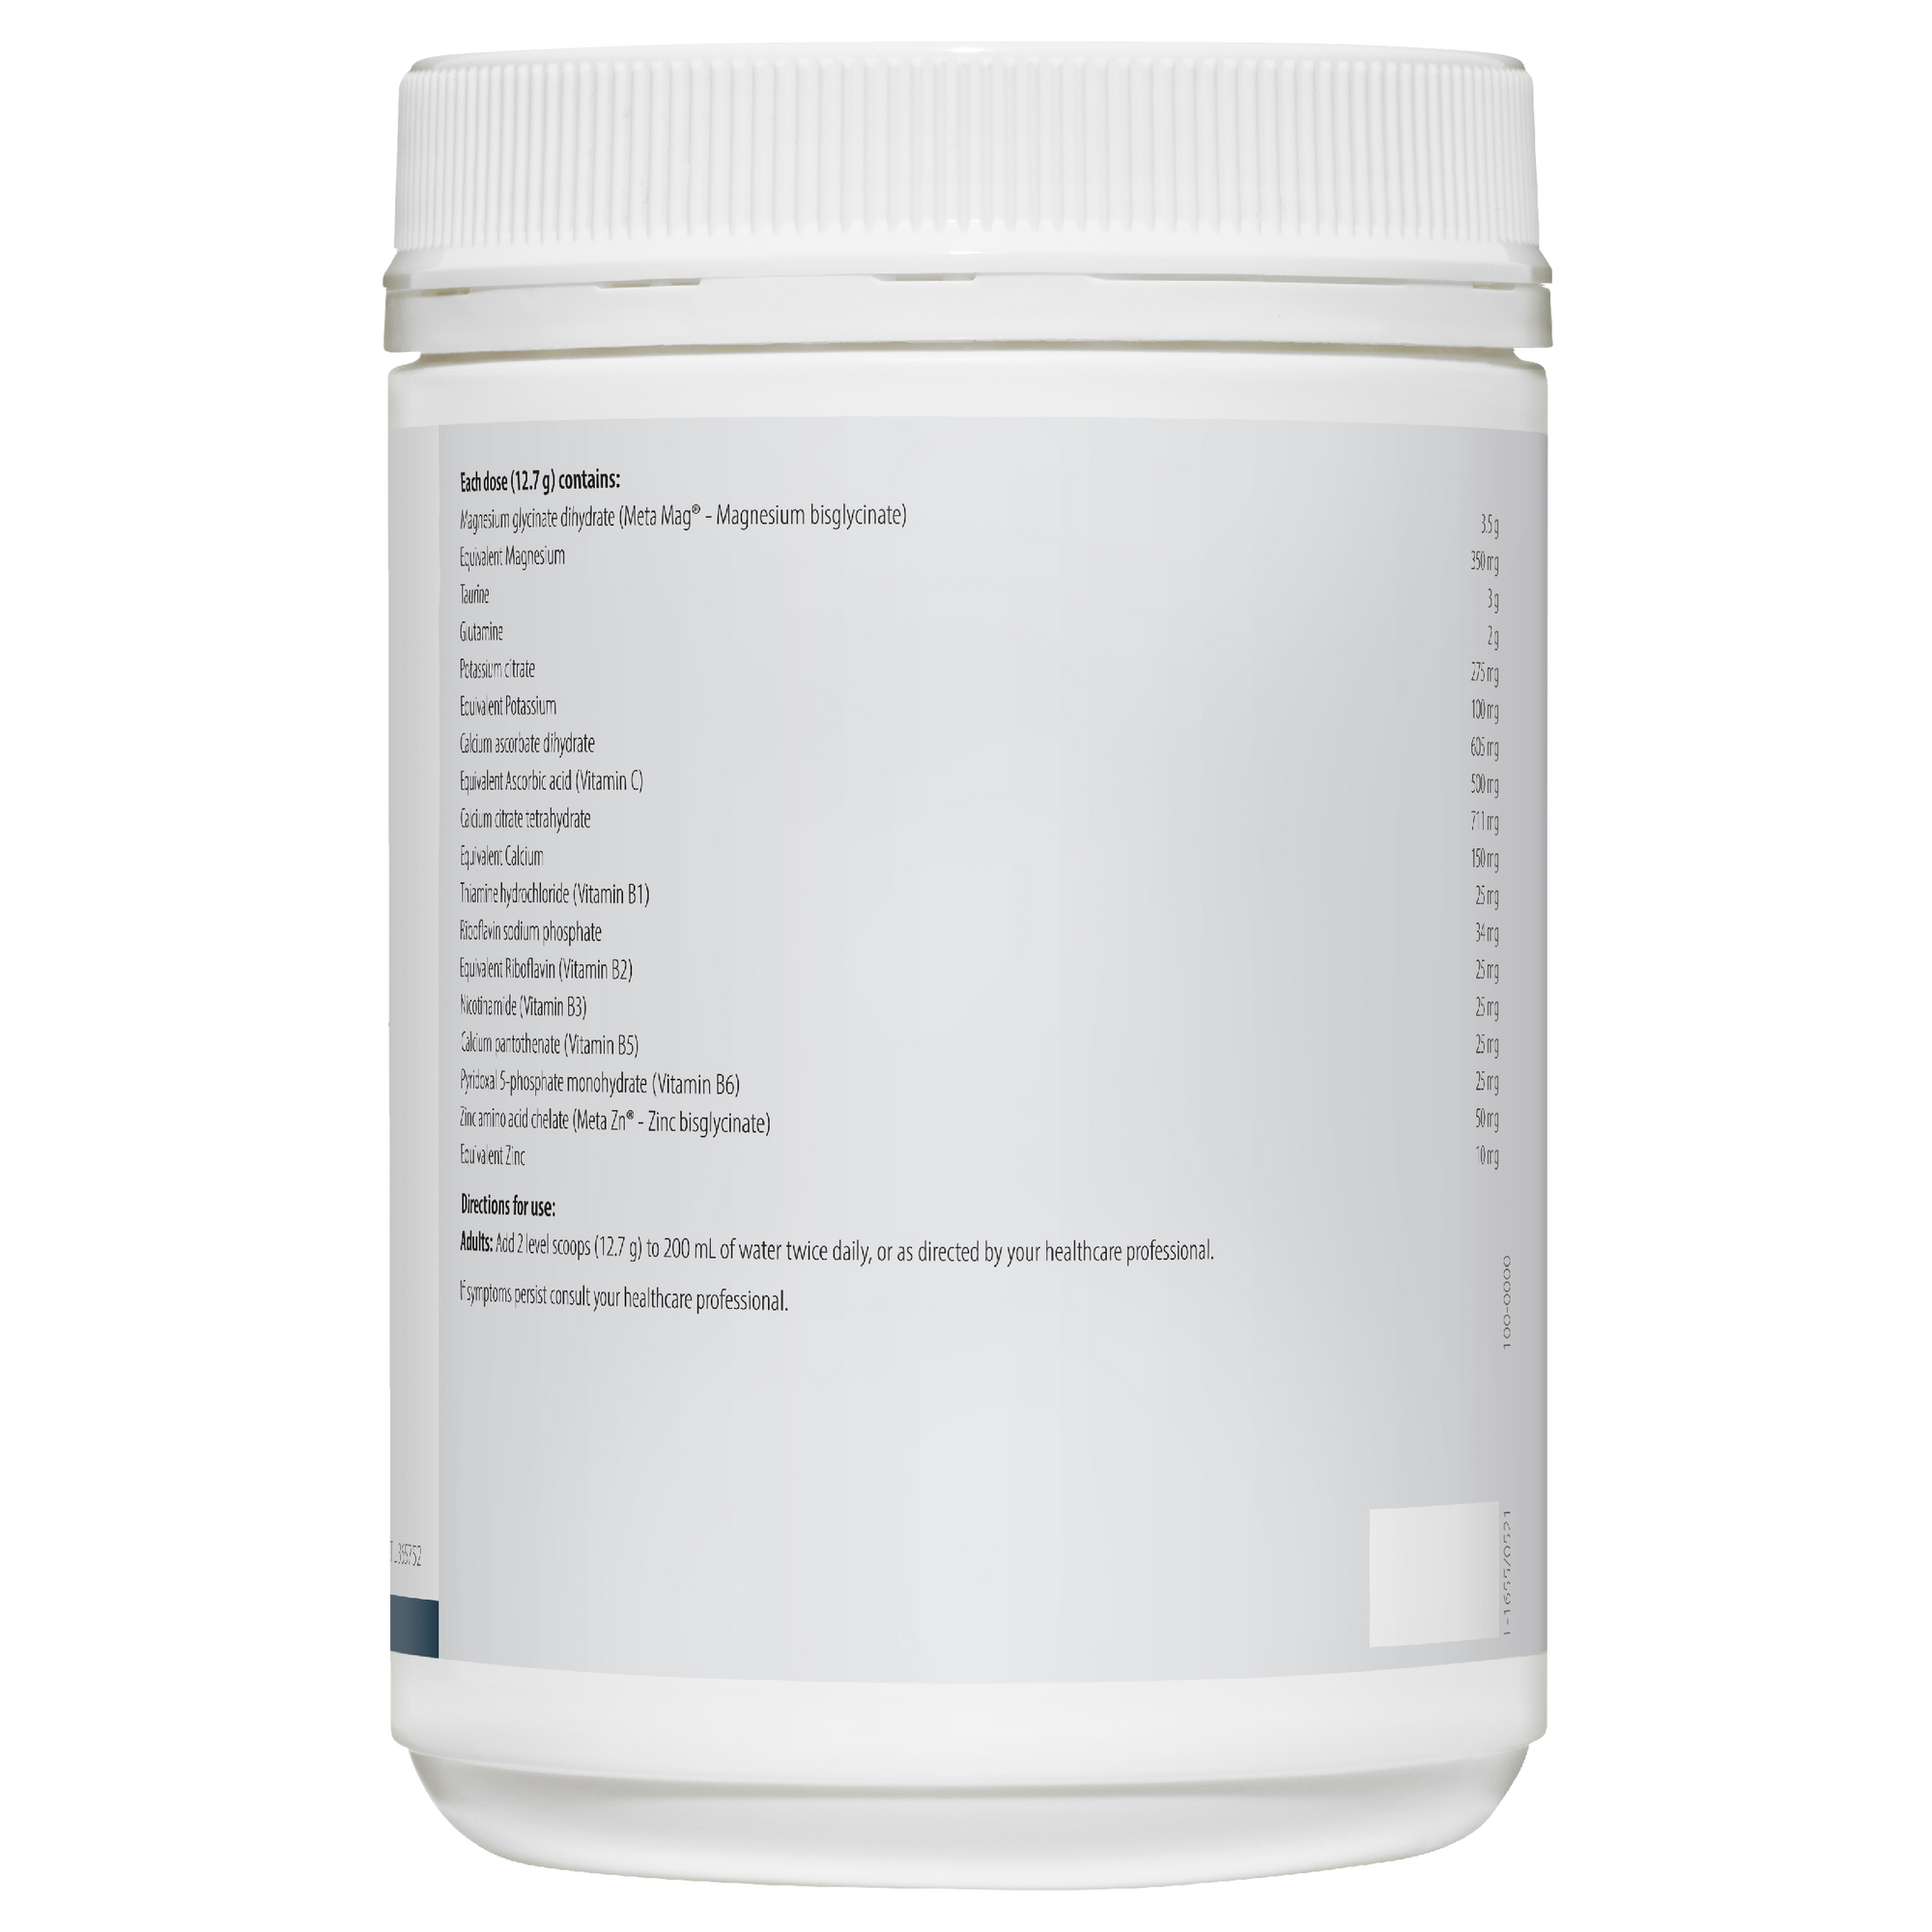 Metagenics CalmX Oral Powder Tropical Flavour 482 g